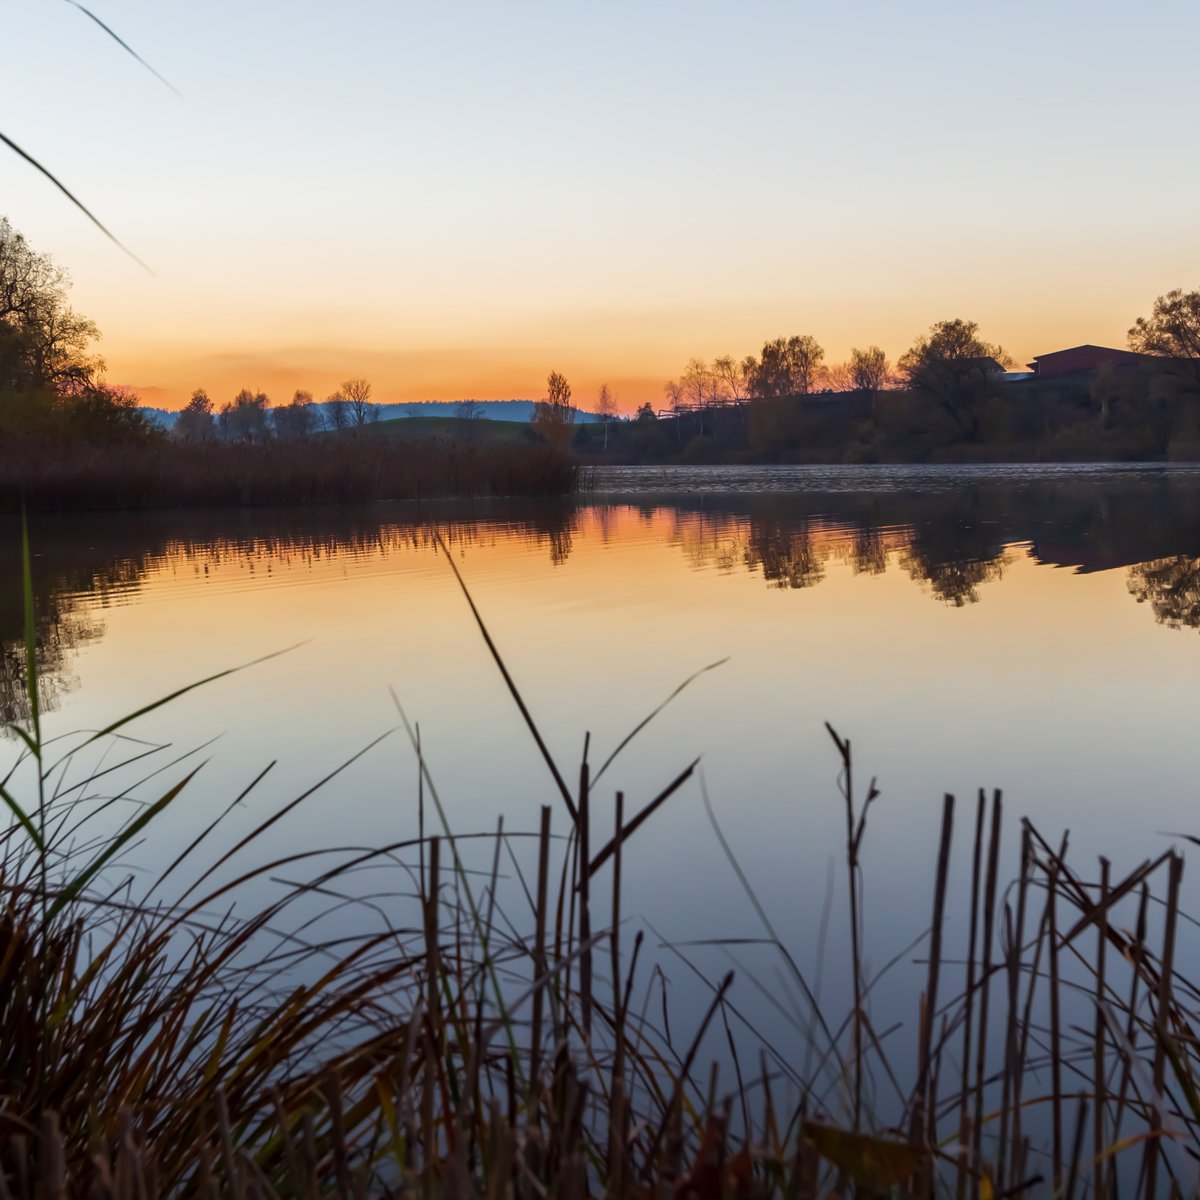 Good Night #XRP Fam

Sunset at a little Pond in Switzerland🇨🇭
#sunsetclub #goodnight #MondayMood